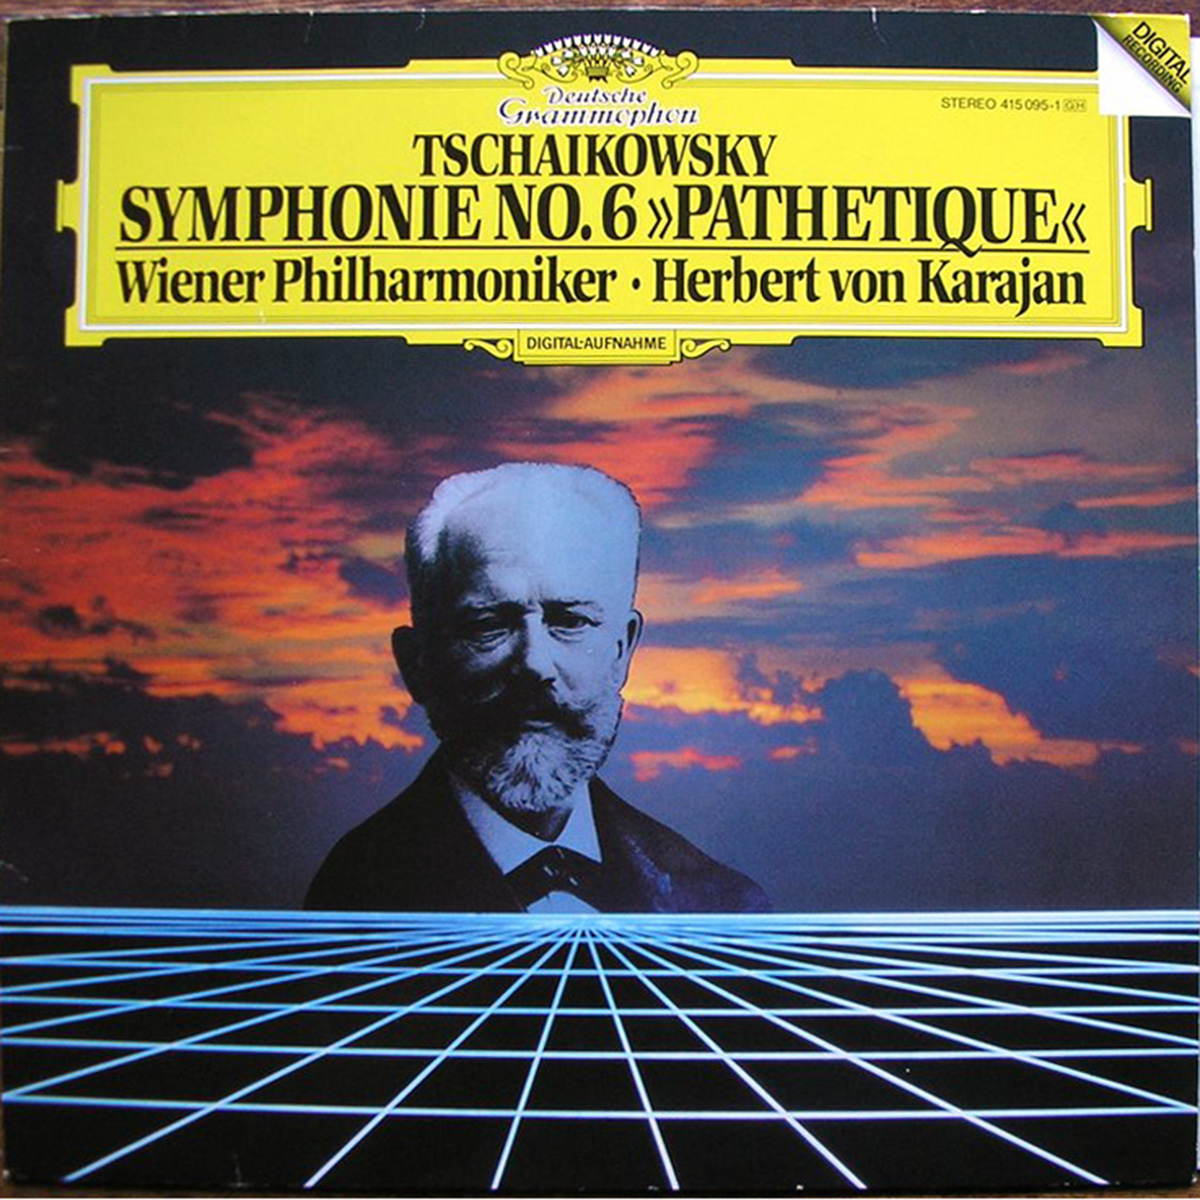 DGG 415 095 Tchaikovsky Symphonie 6 Karajan DGG Digital Aufnahme